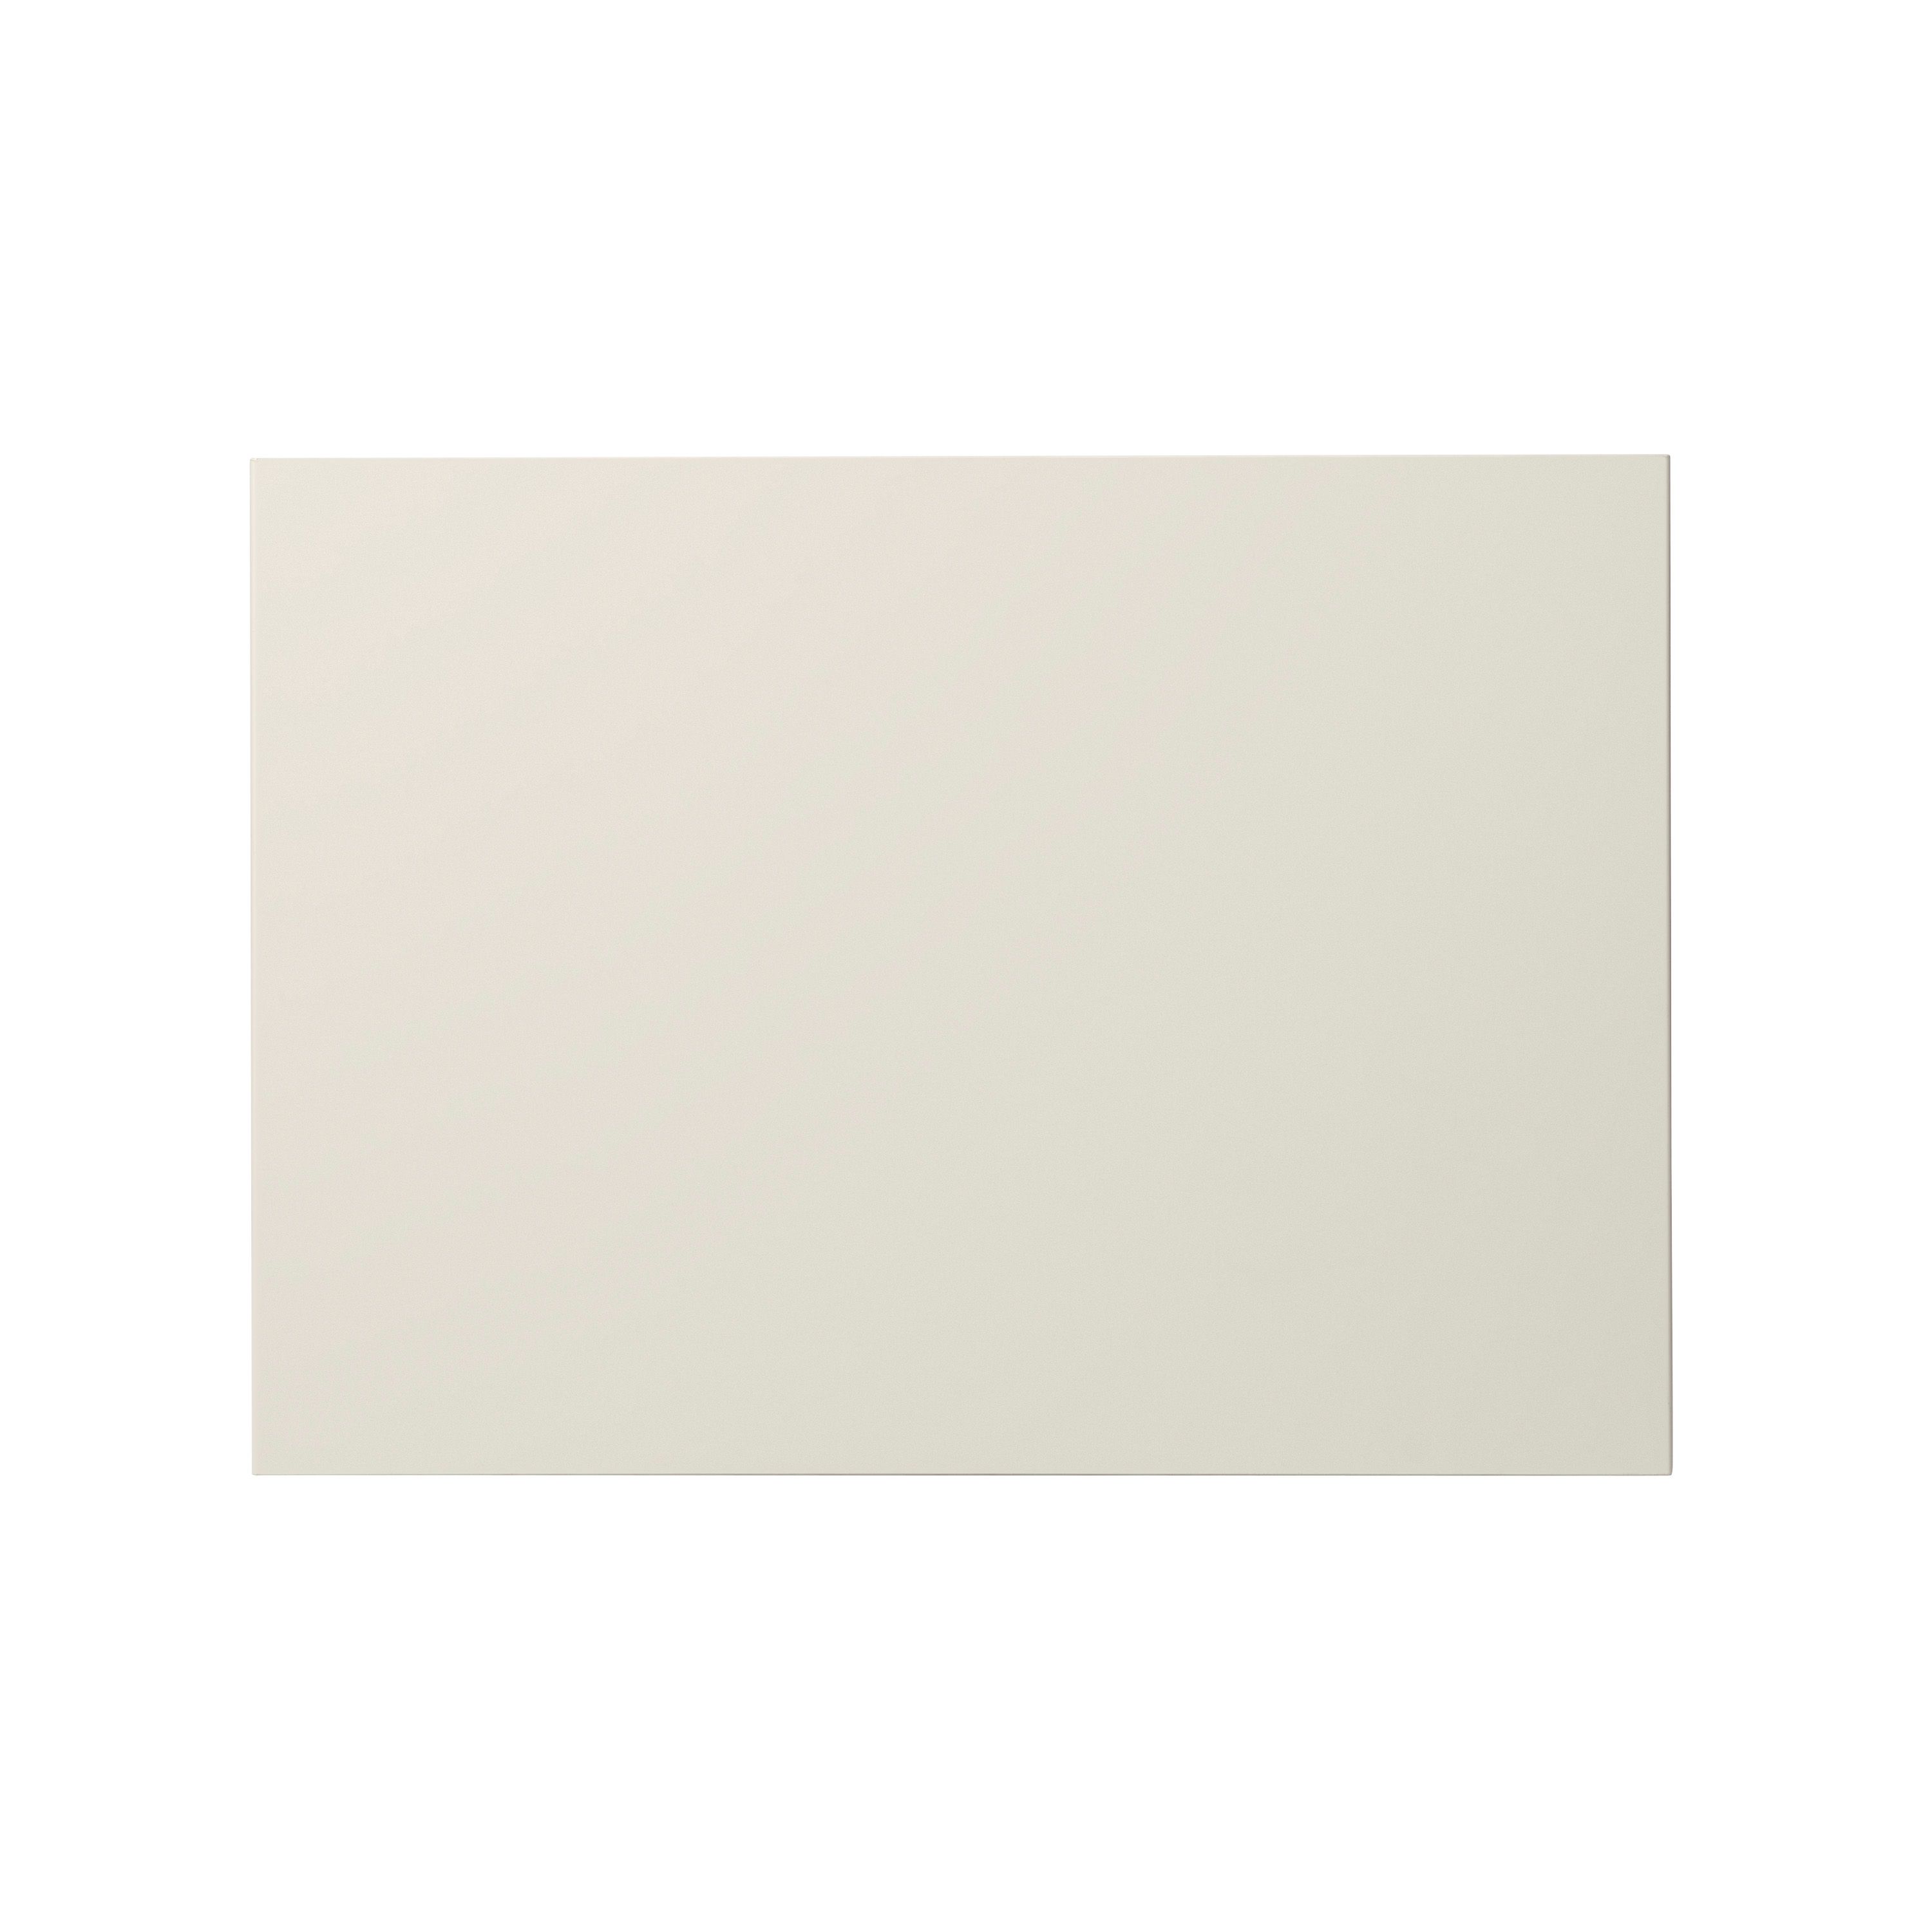 GoodHome Stevia Gloss cream slab Drawer front, bridging door & bi fold door, (W)500mm (H)356mm (T)18mm